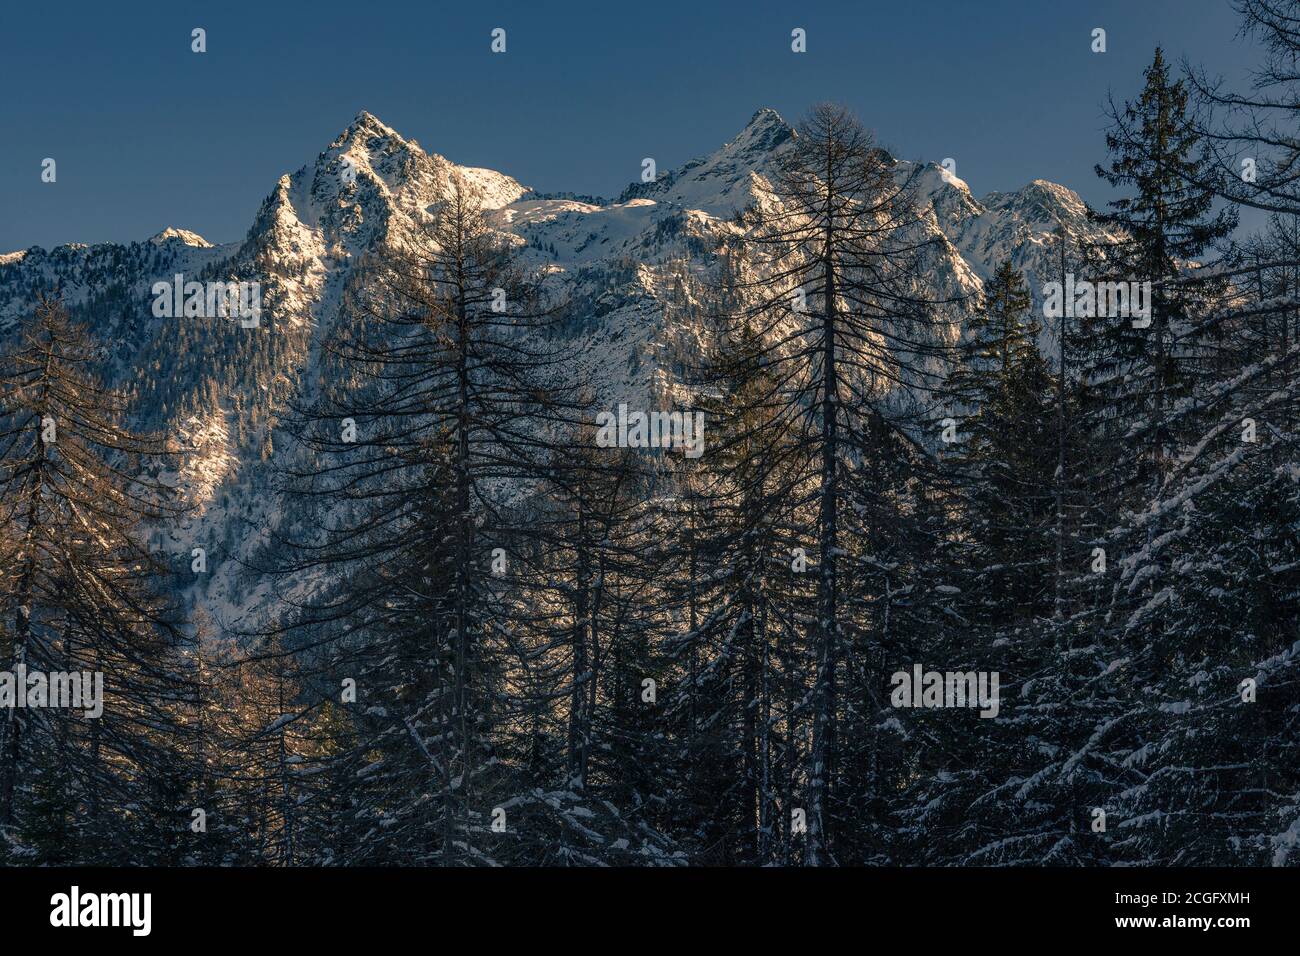 picks snowcapped in Monte Rosa range. Gressoney saint jean village. Aosta valley, Italy, Europe Stock Photo